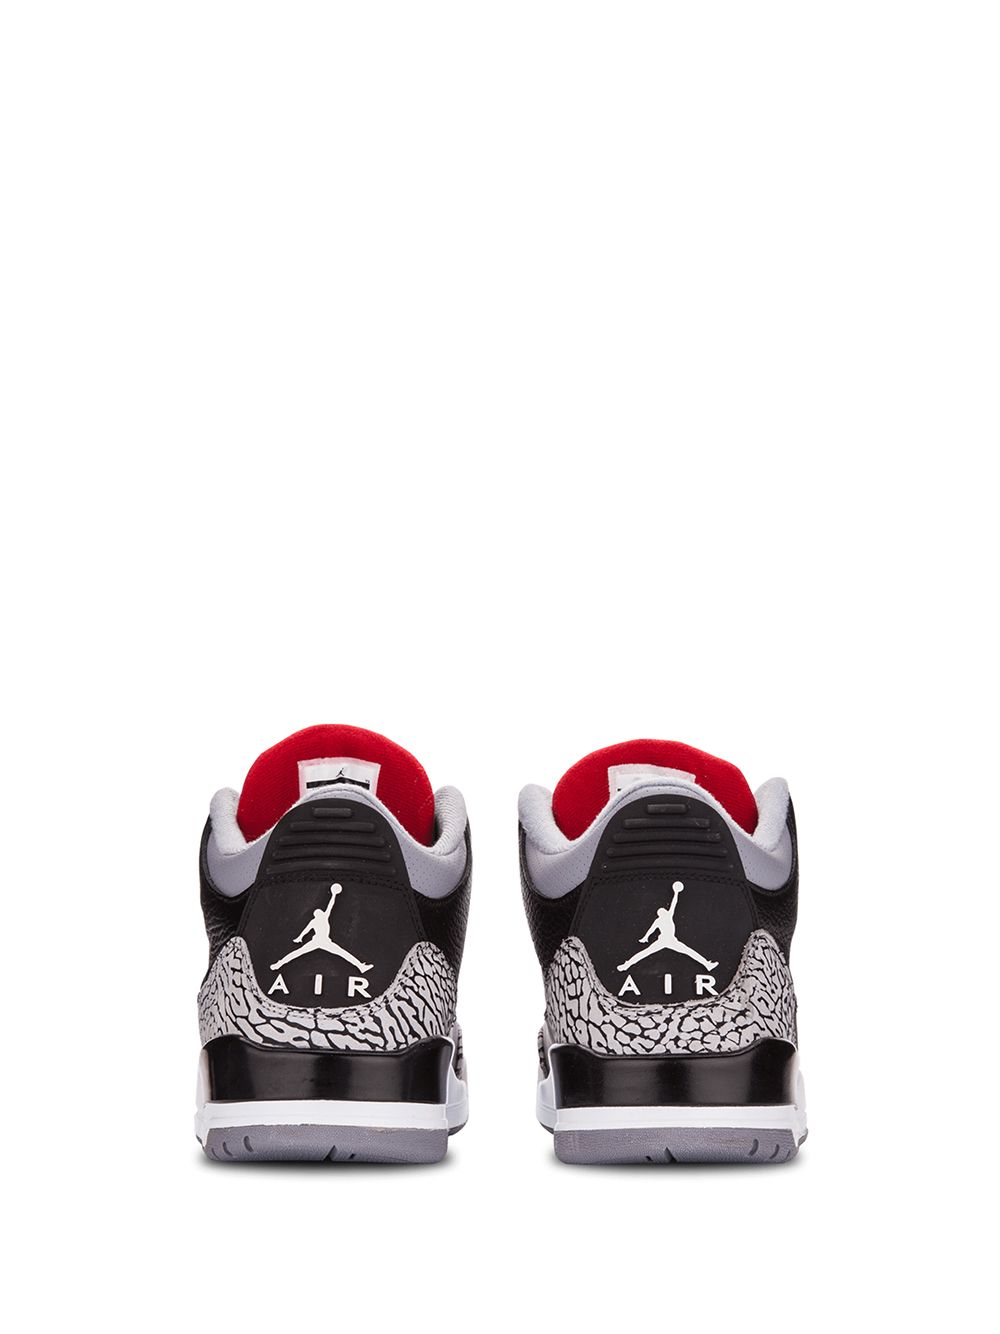 Shop Jordan Air Jordan 3 Retro black cement with Express Delivery 